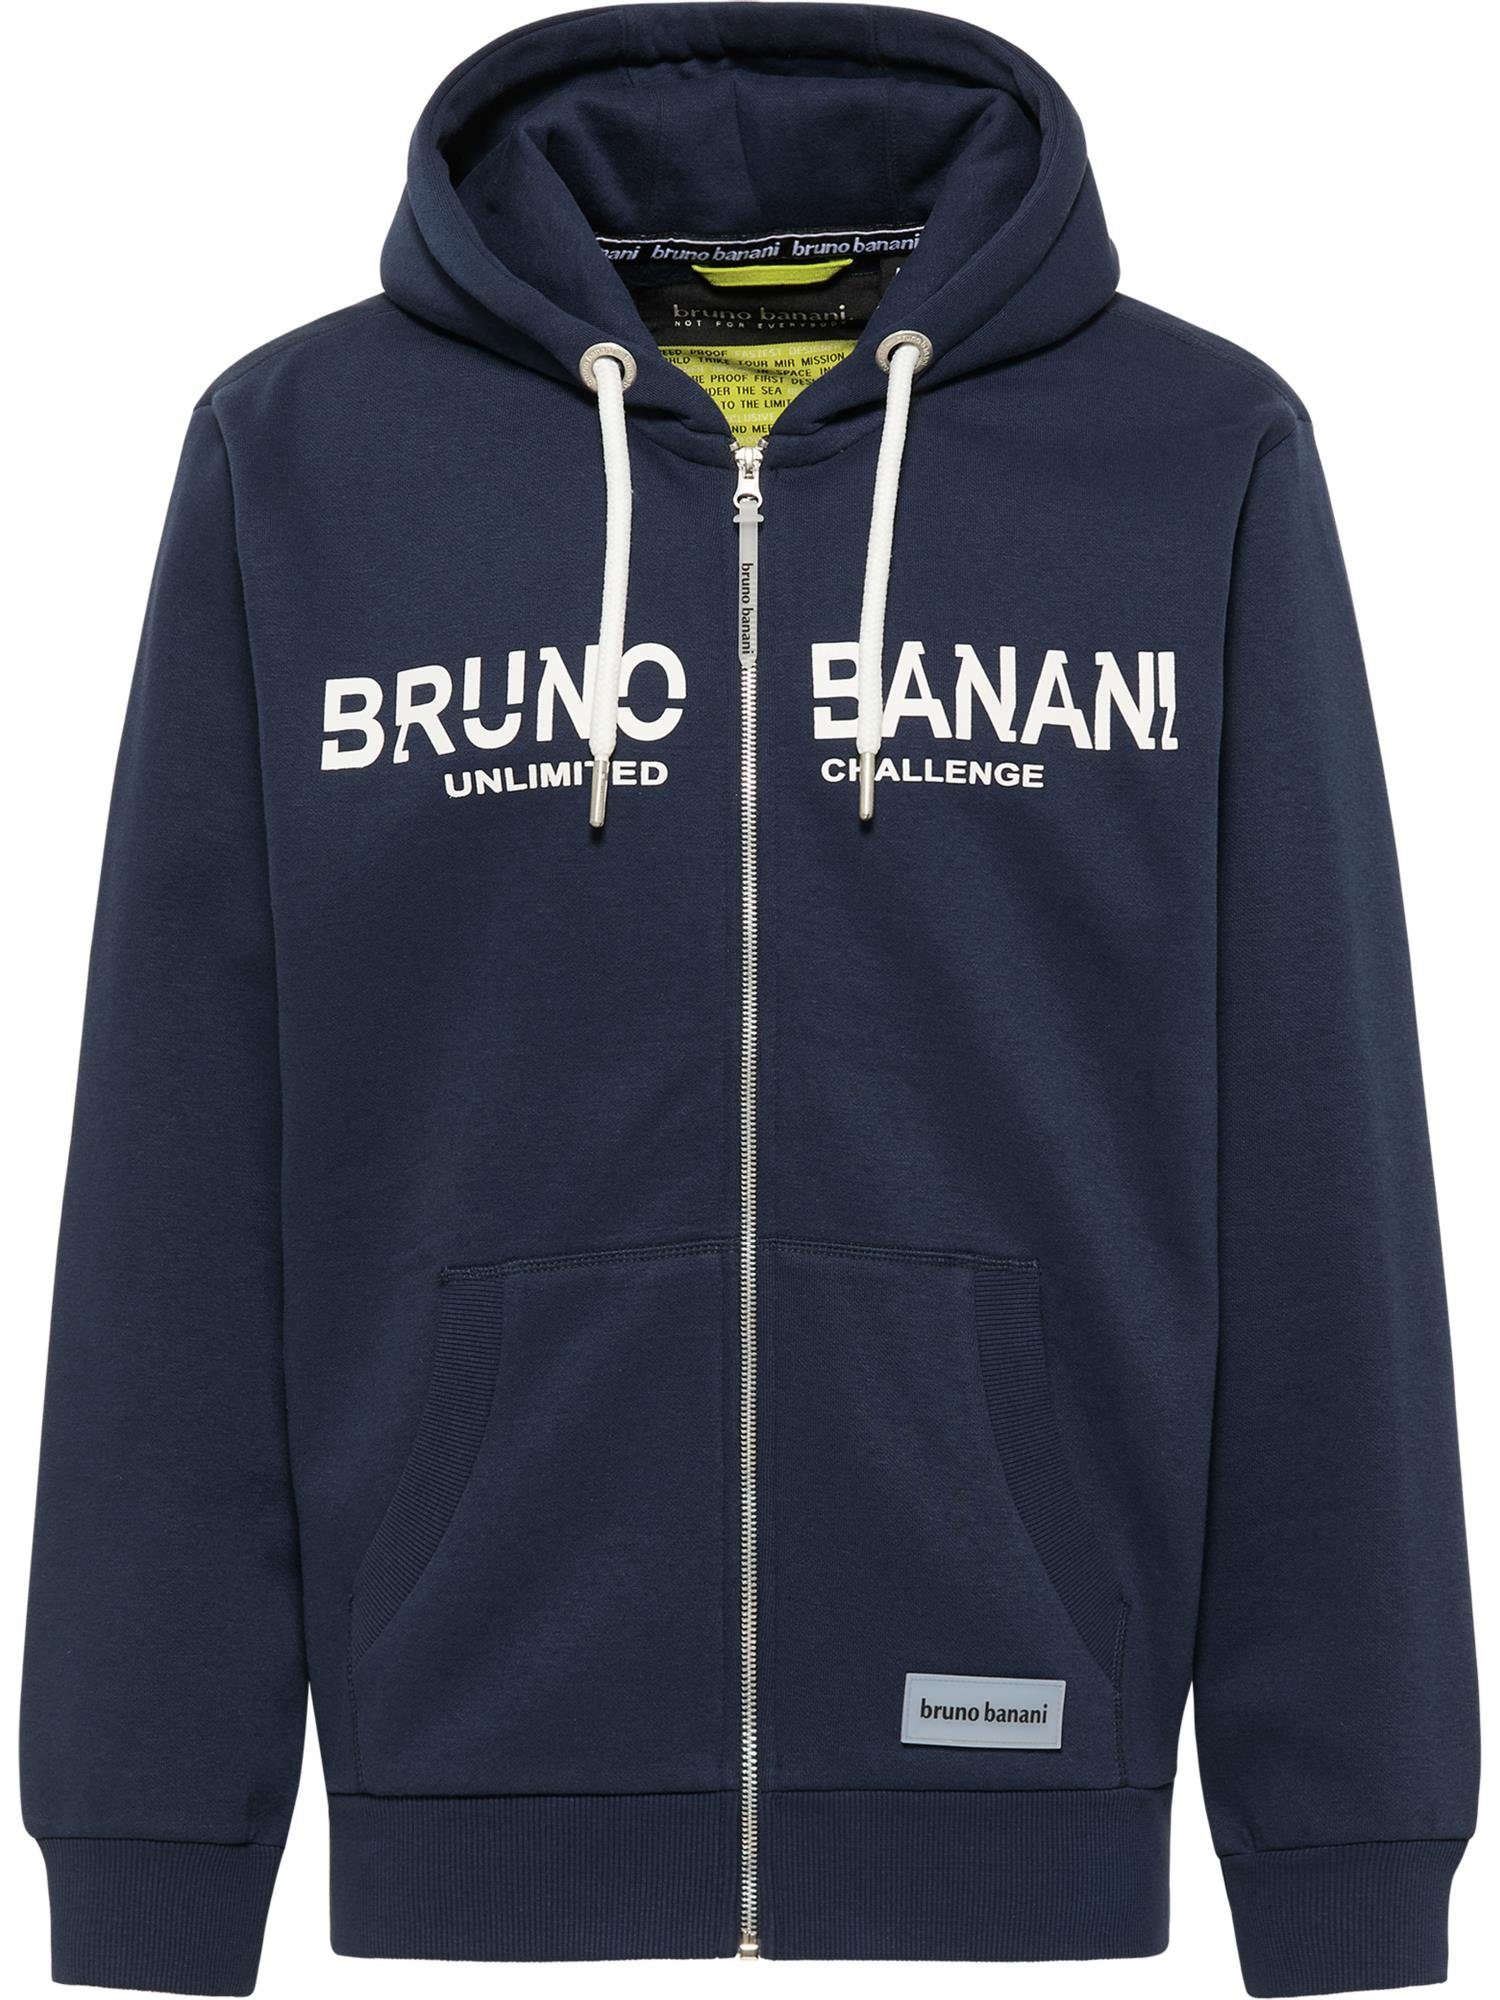 Kapuzensweatjacke Banani Bruno AGUIRRE